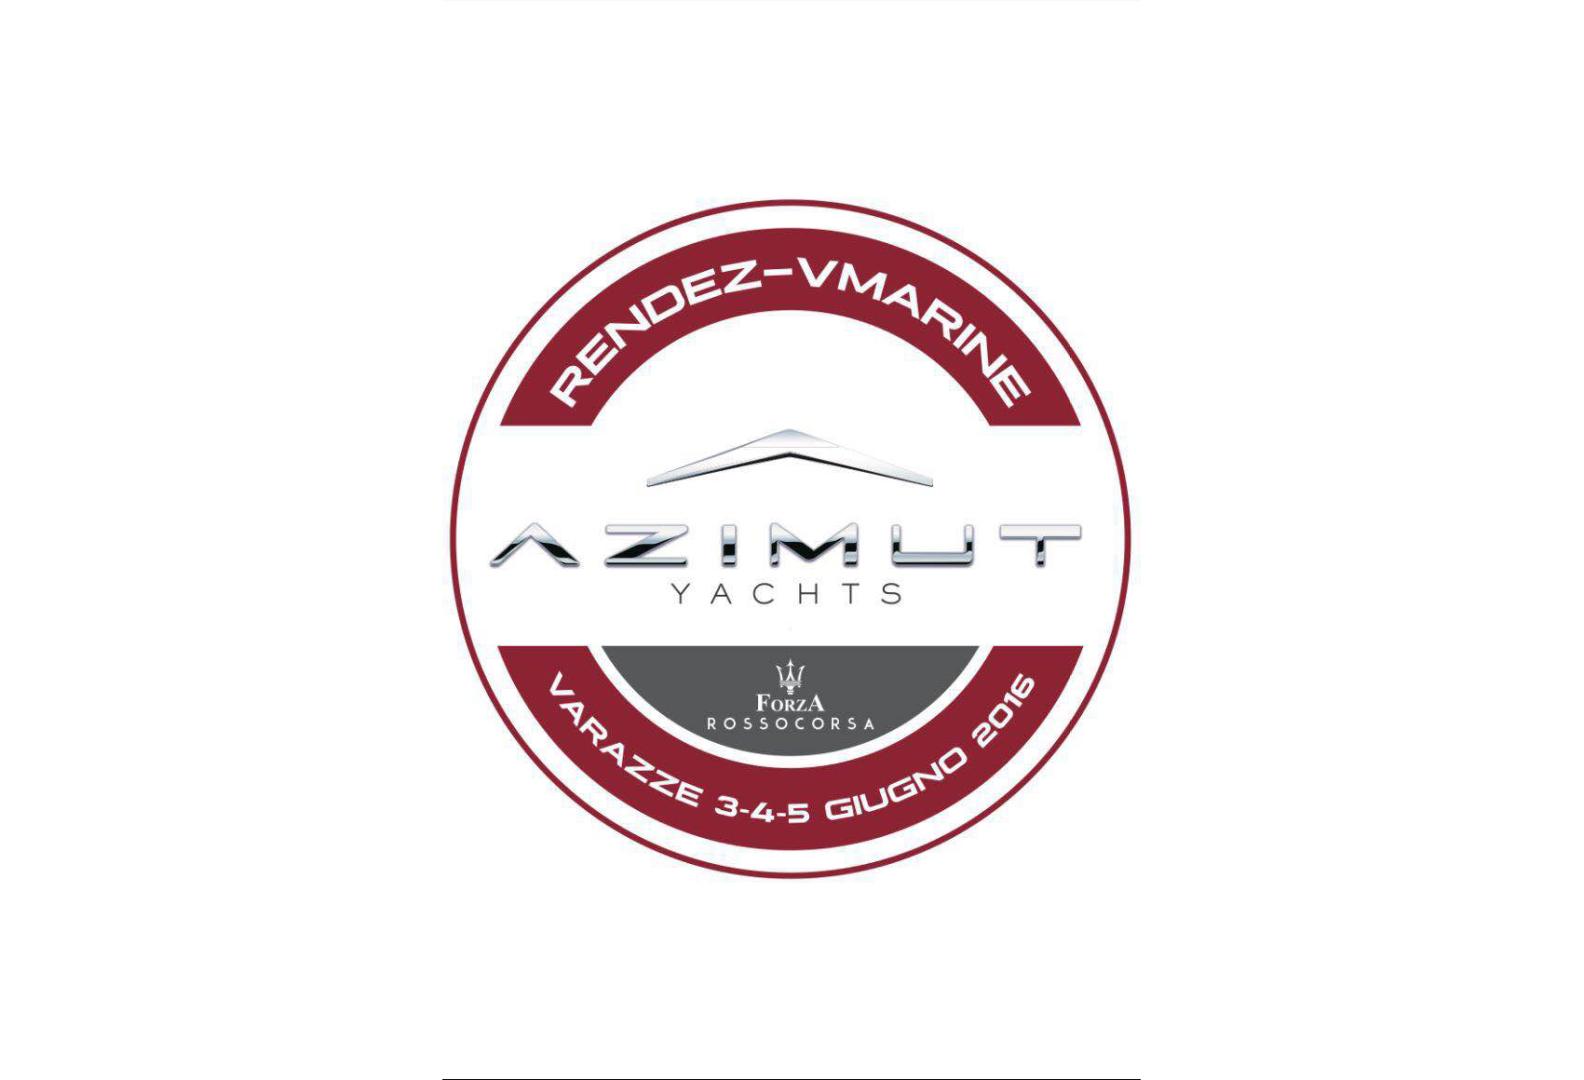 Il logo del Rendez-VMarine, Raduno Azimut Yachts